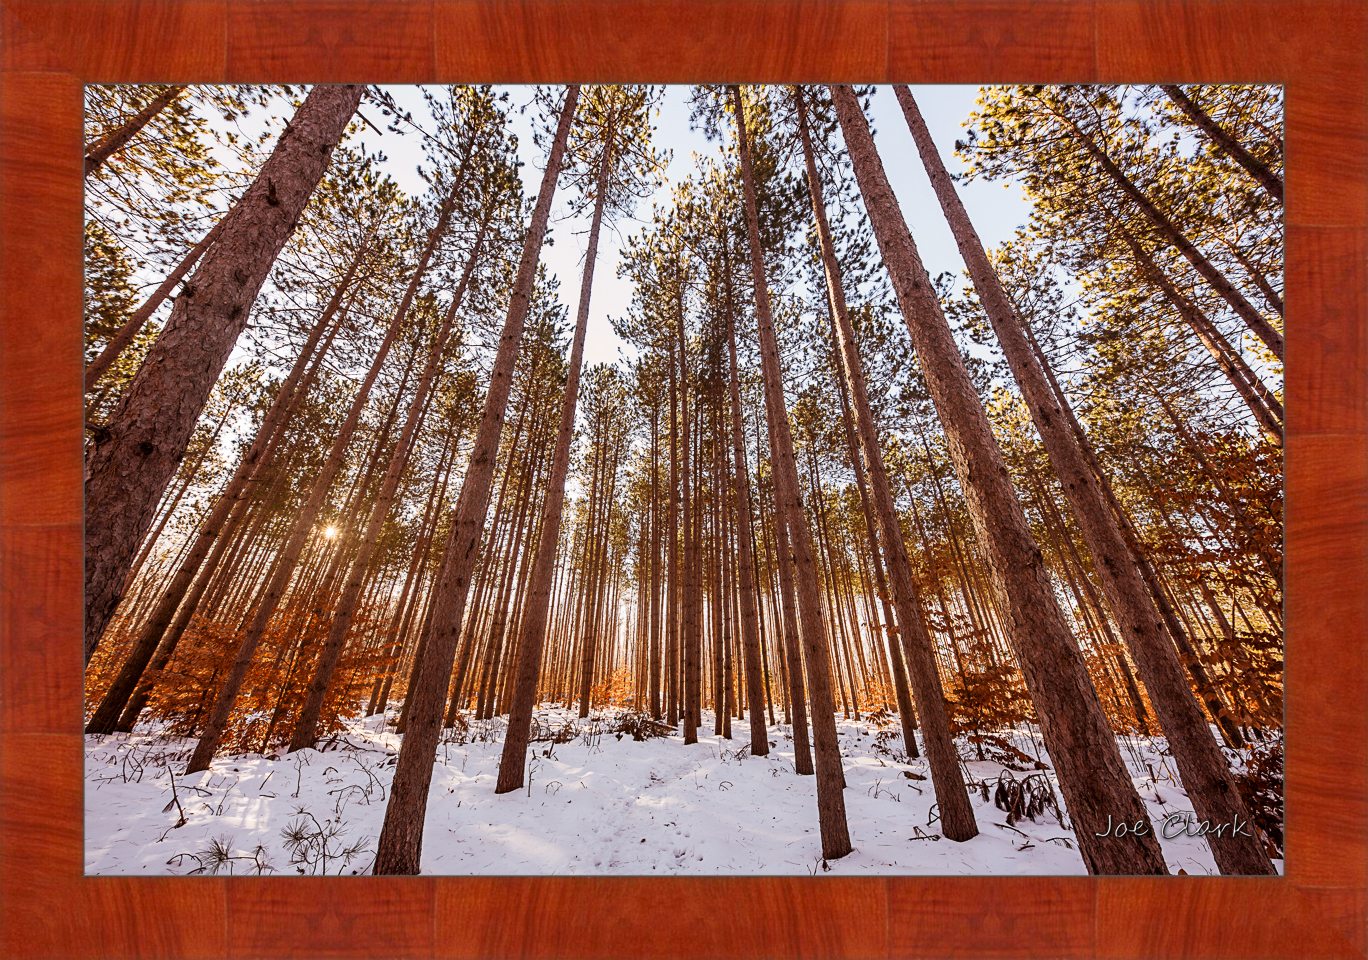 Pine Snow by Joe Clark R60553